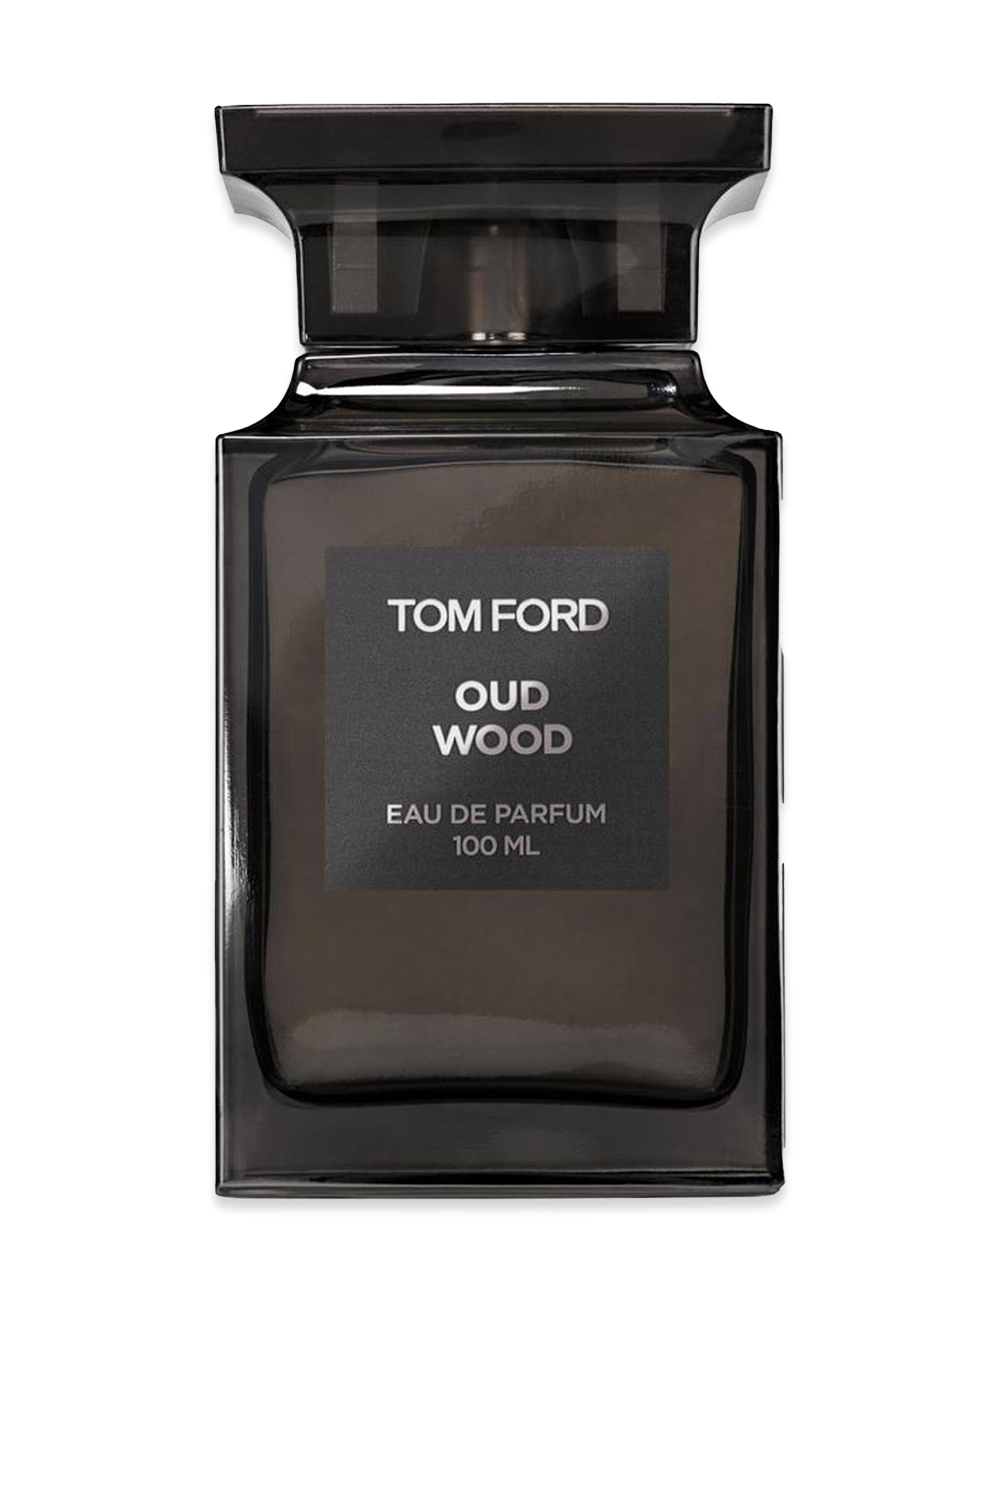 Oud Wood Eau de Parfum 100 ML TOM FORD